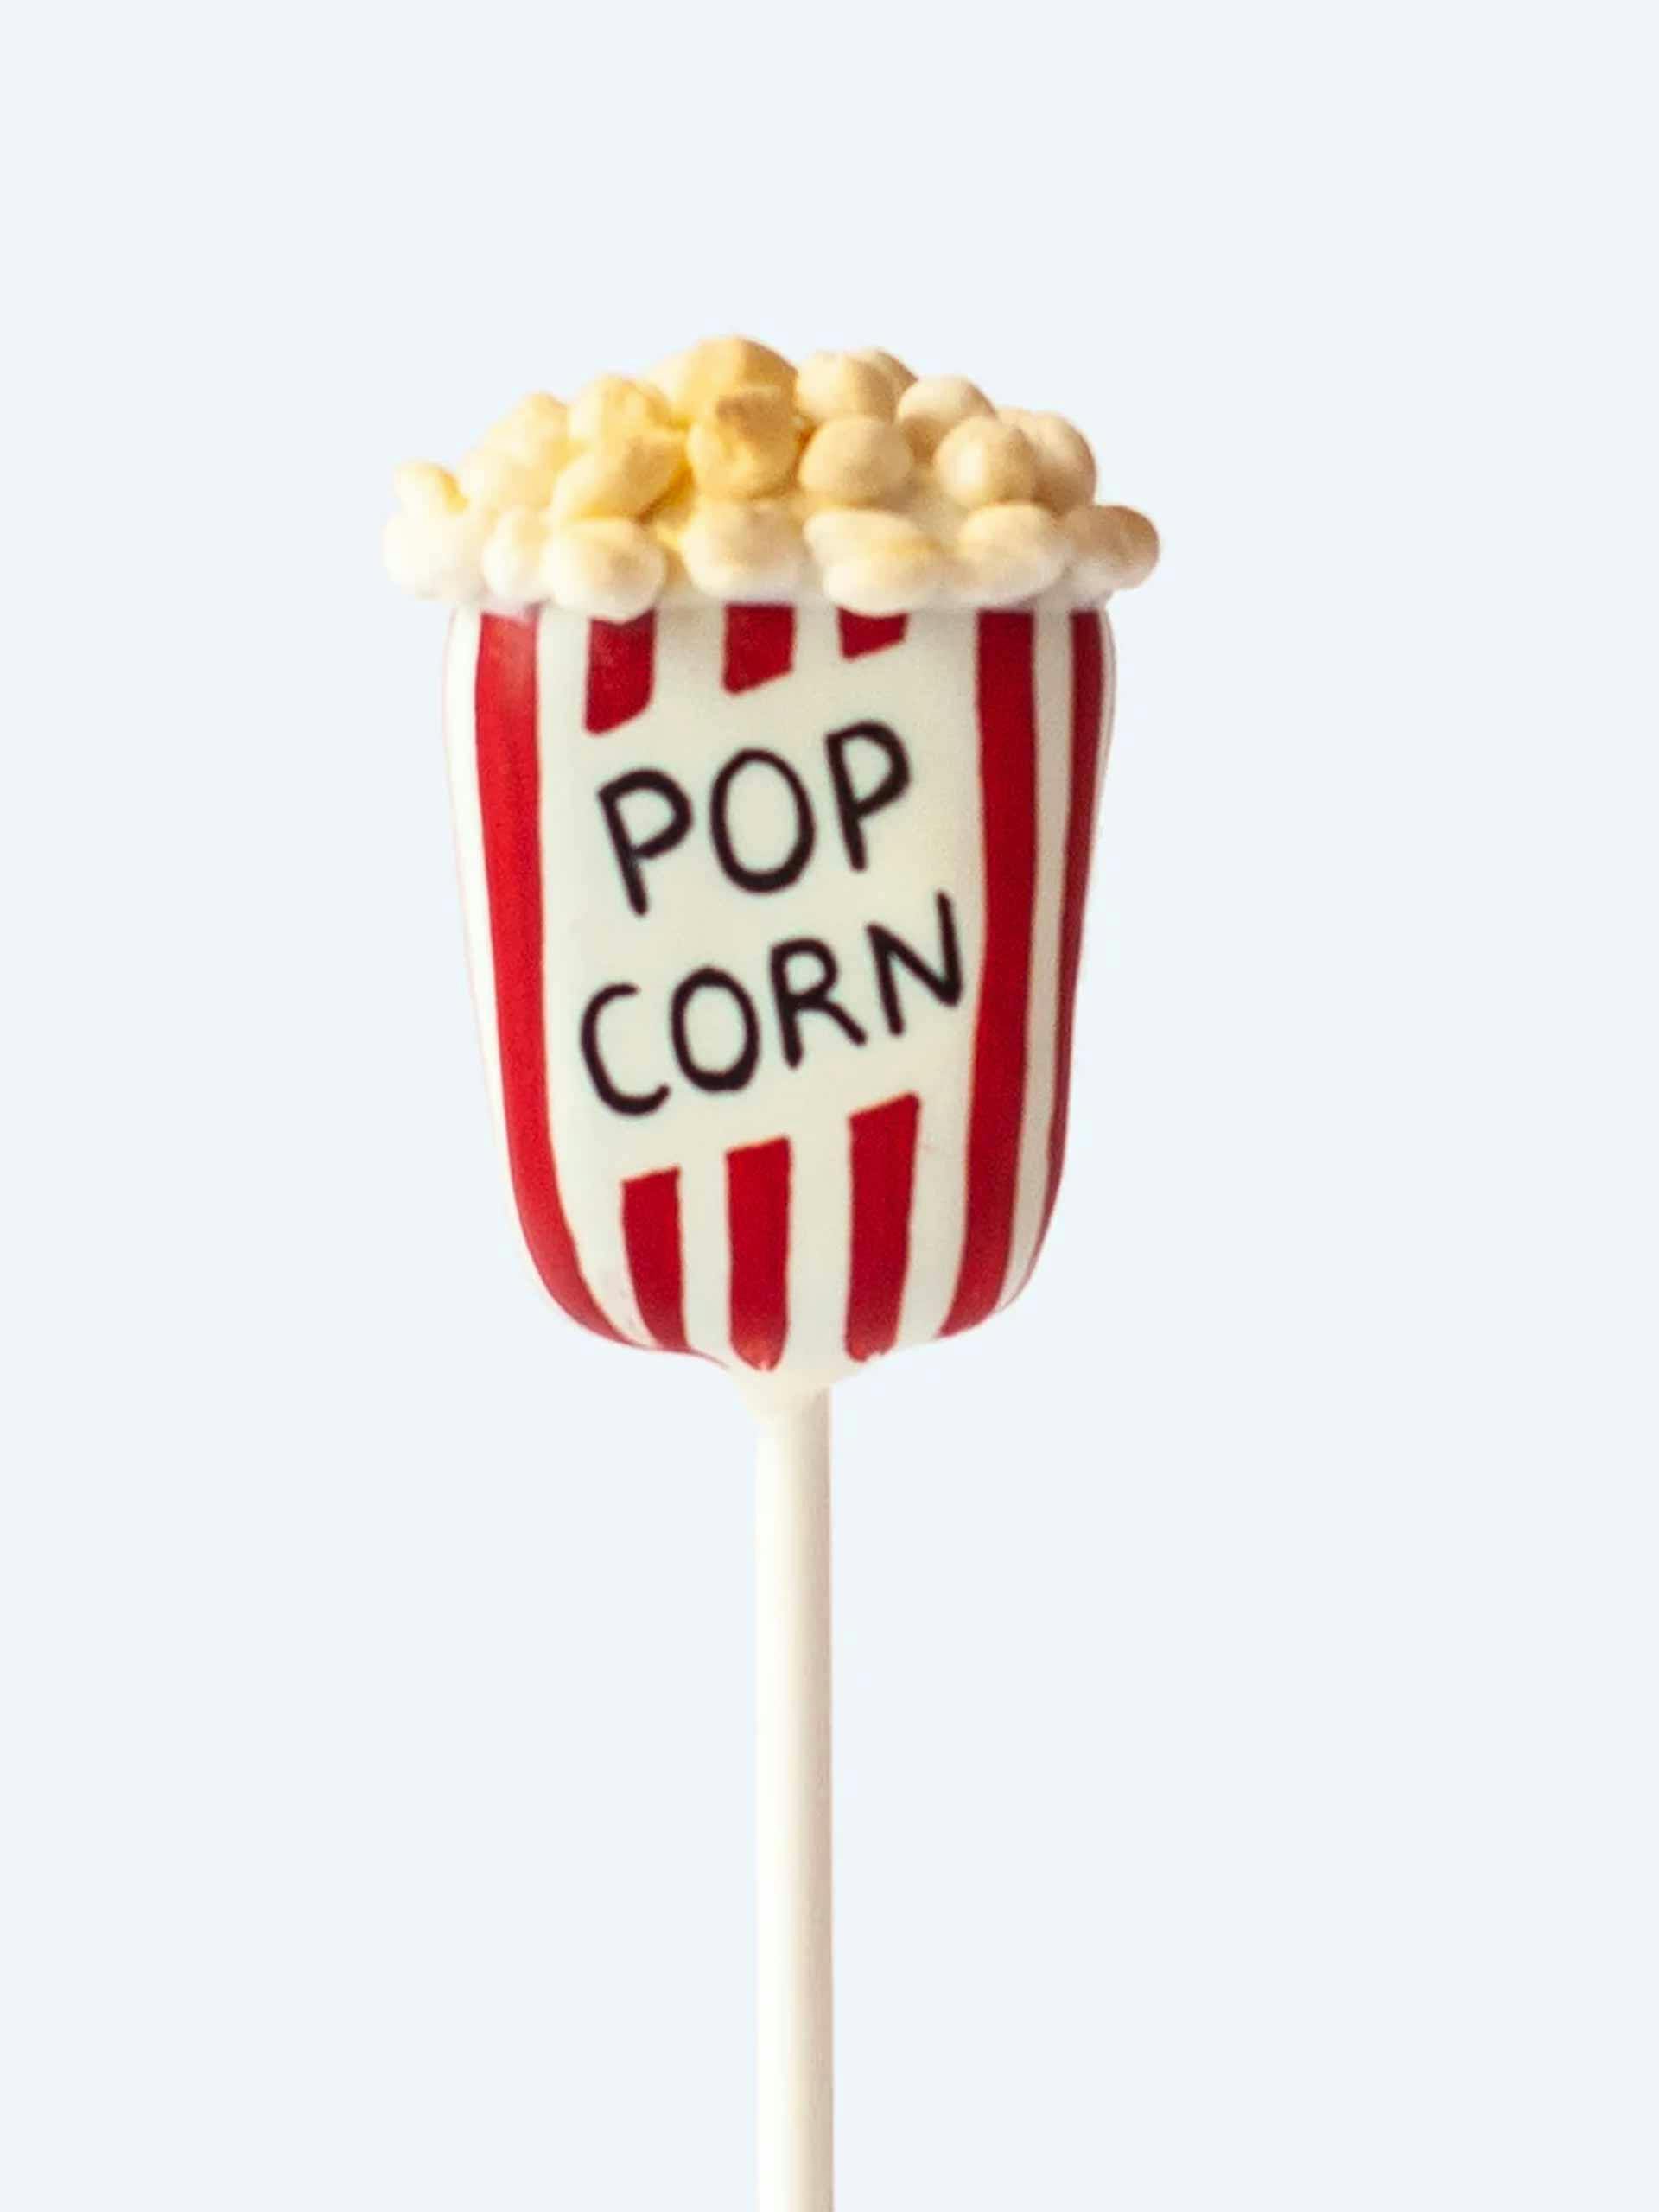 Popcorn pop